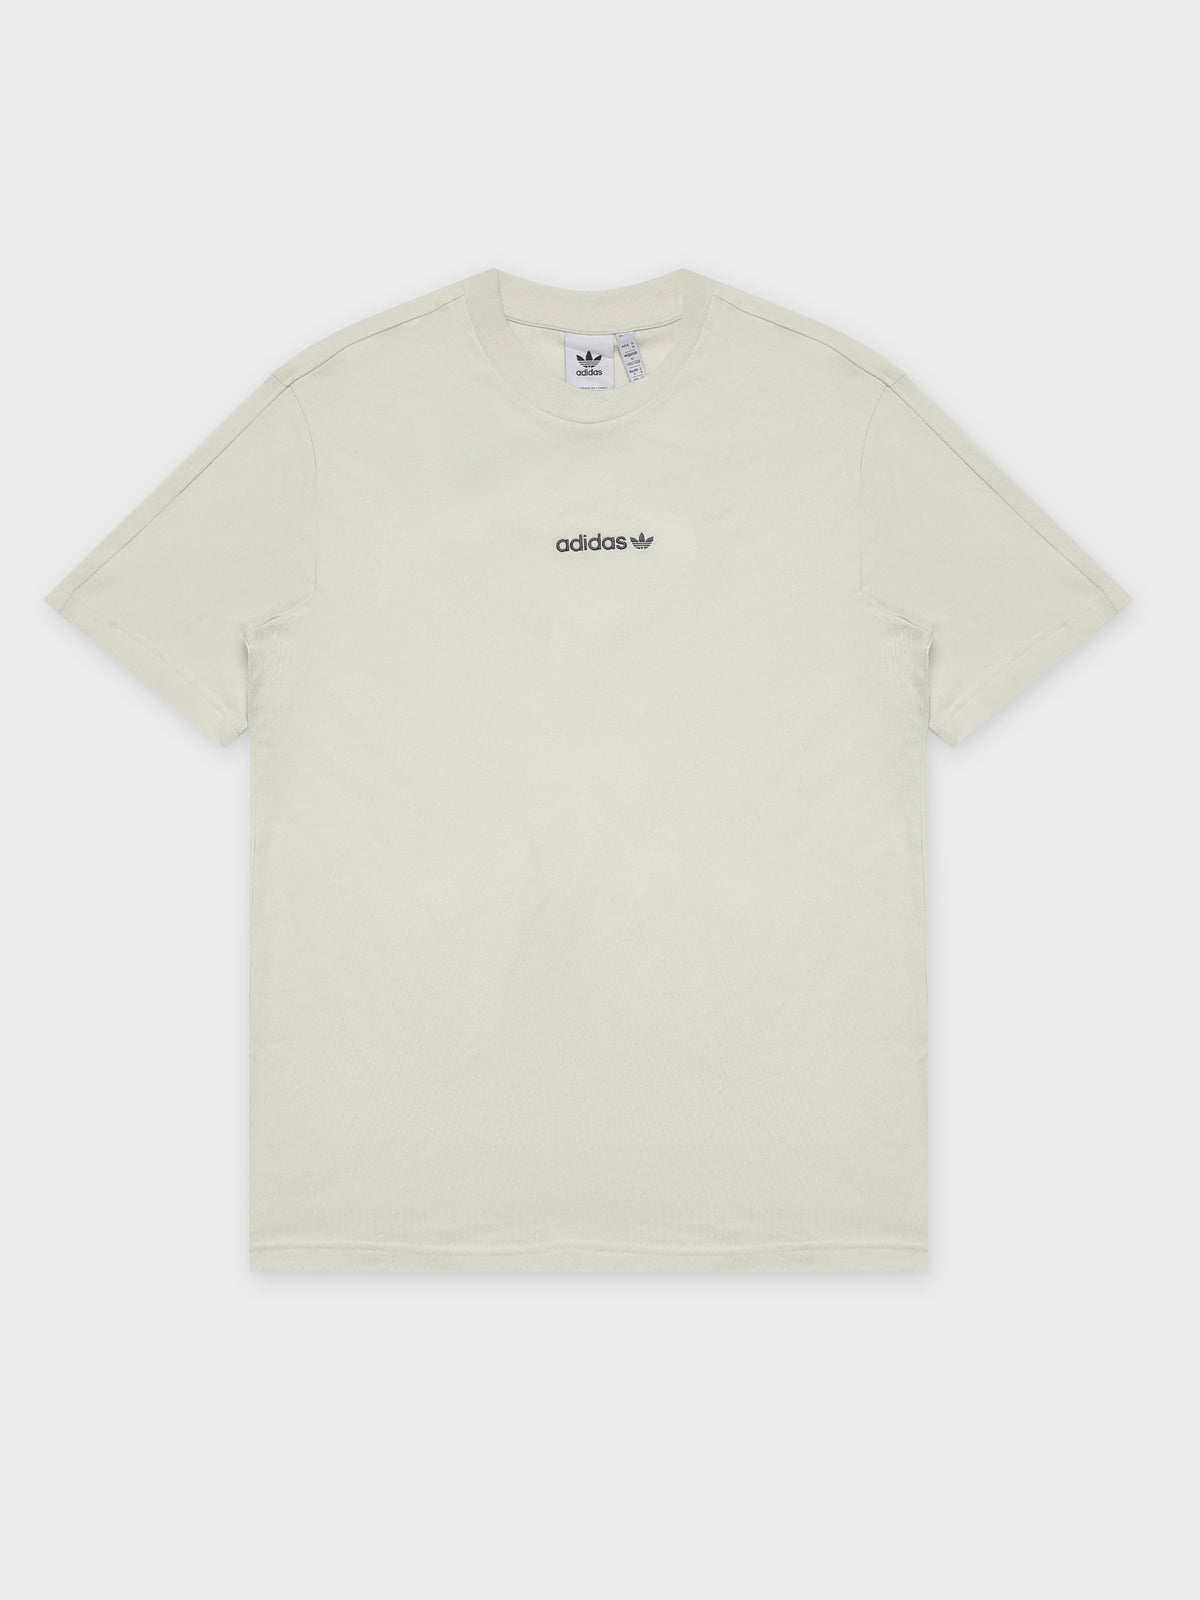 Edge Seam T-Shirt in Aluminium White